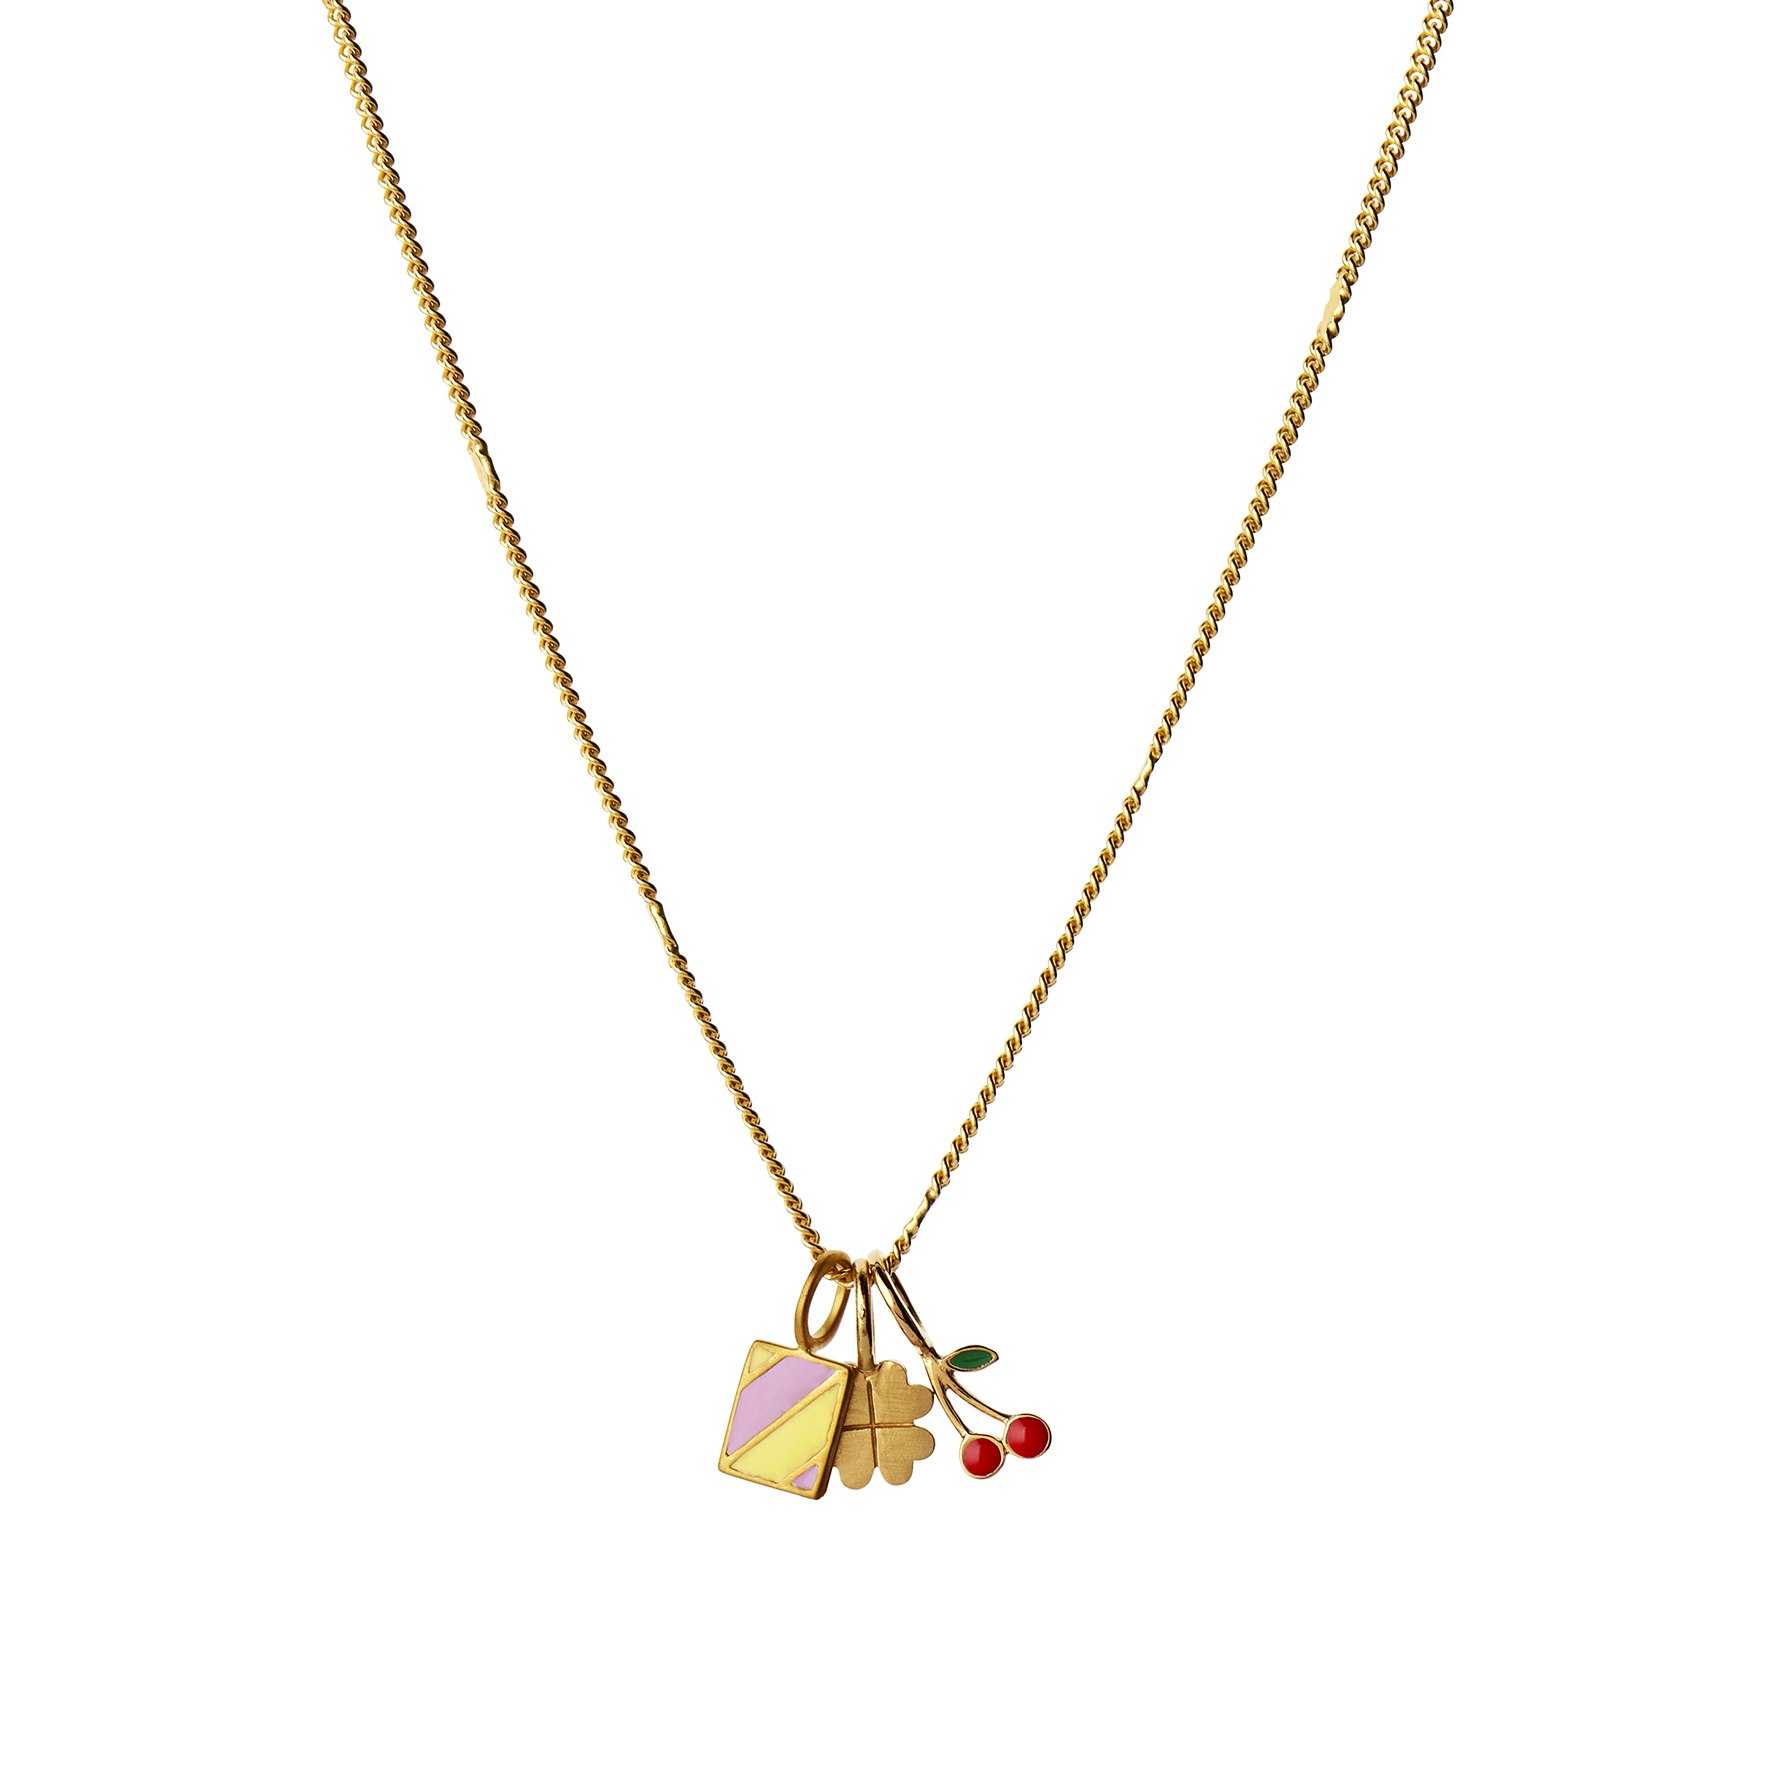 Petit Cherry Pendant Enamel fra STINE A Jewelry i Forgylt-Sølv Sterling 925